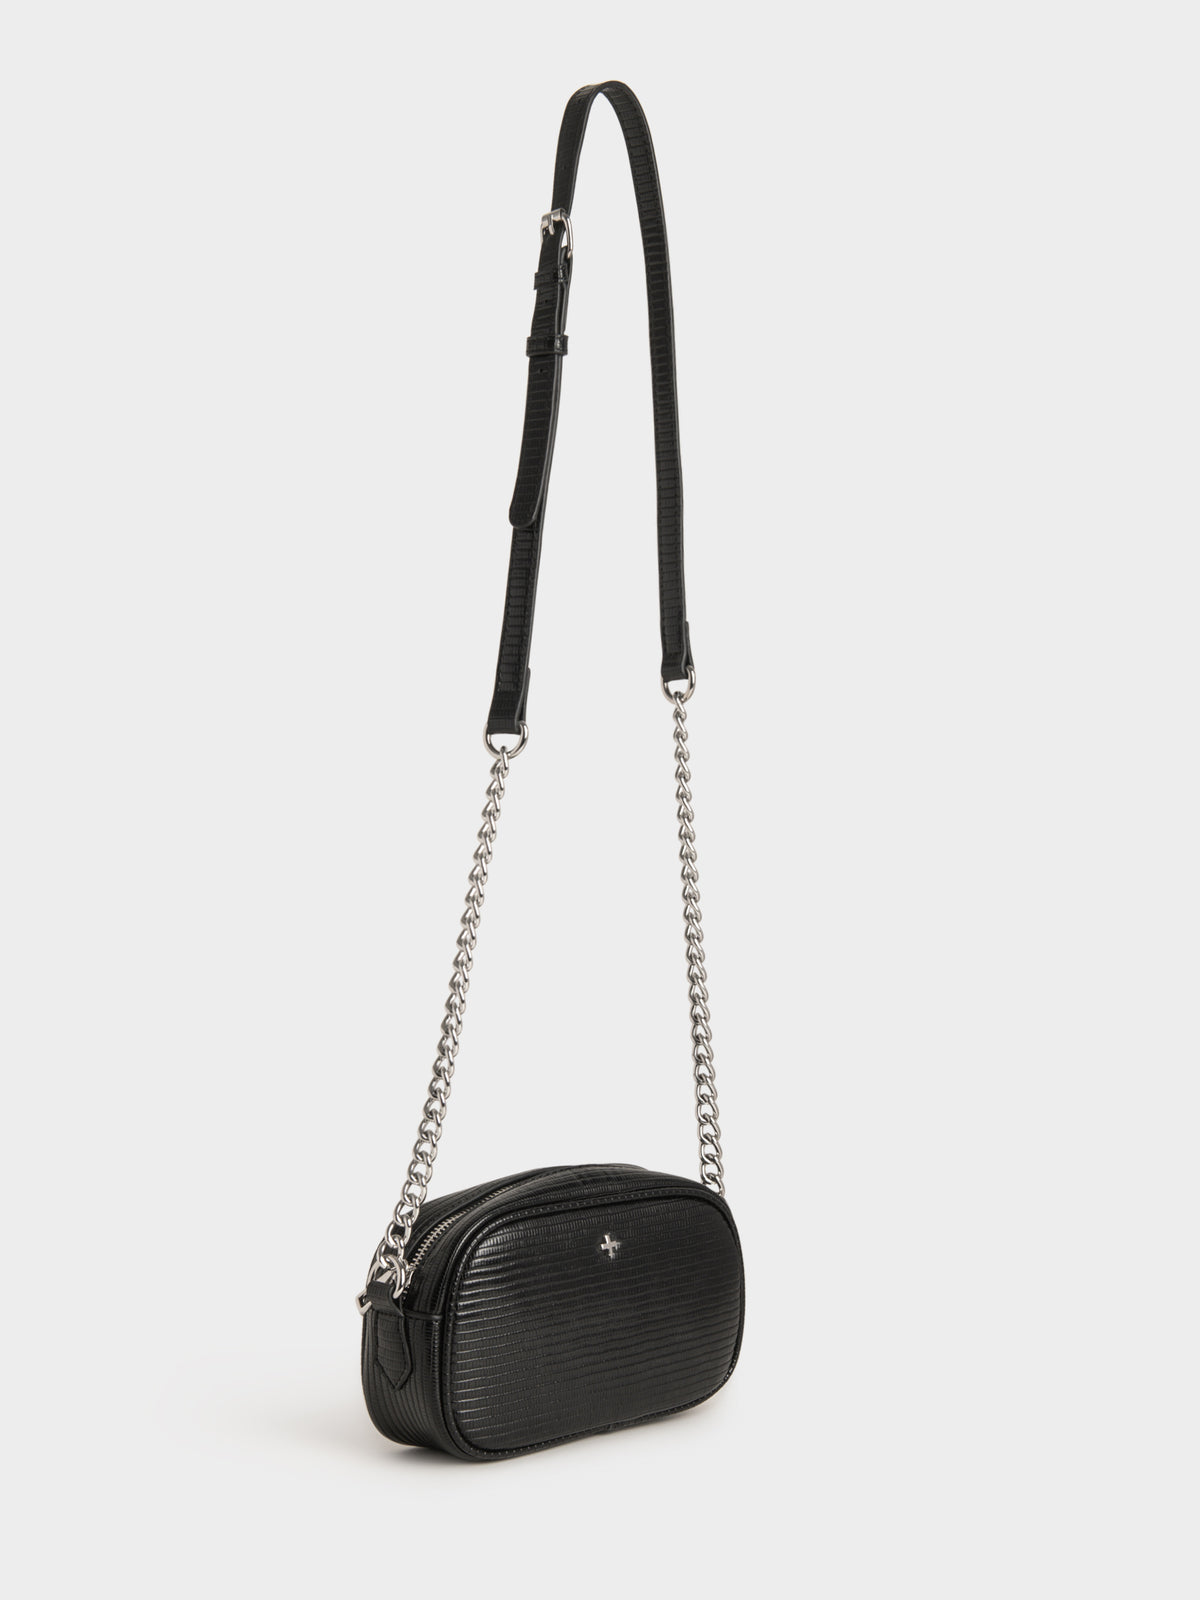 Cori Crossbody Bag in Black Pebble